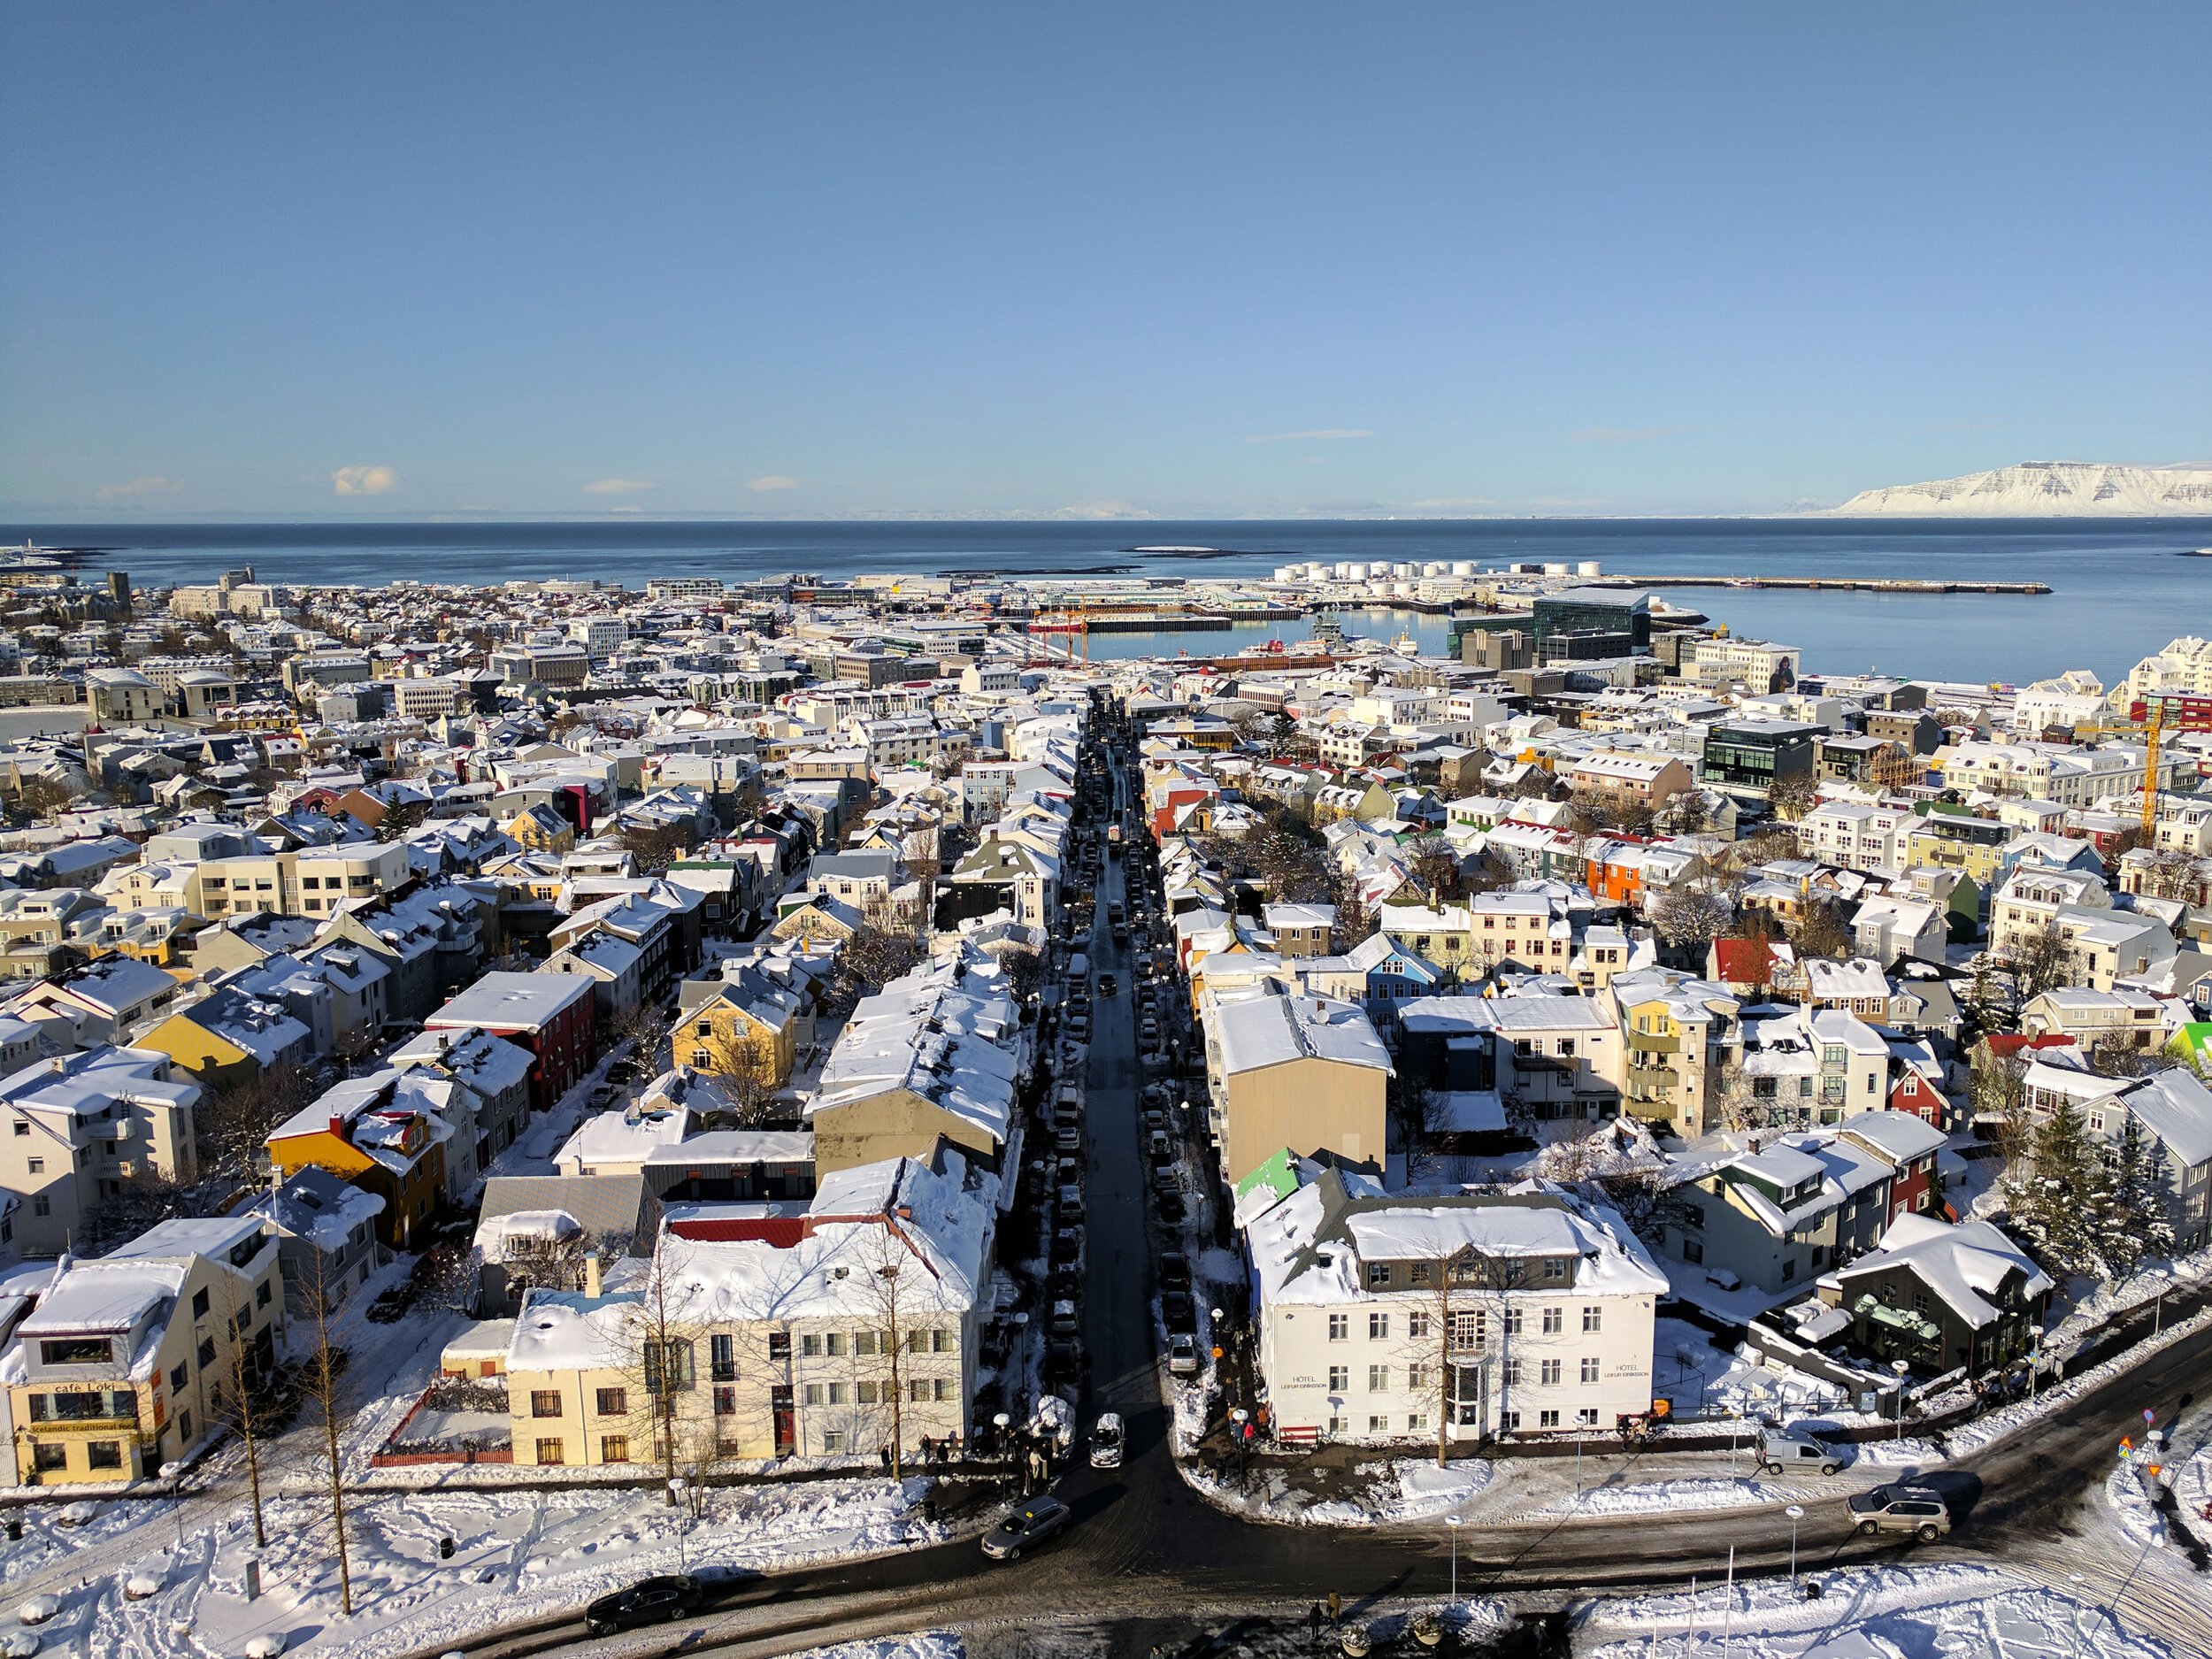 Snowy-Reykjavik-from-above.jpg